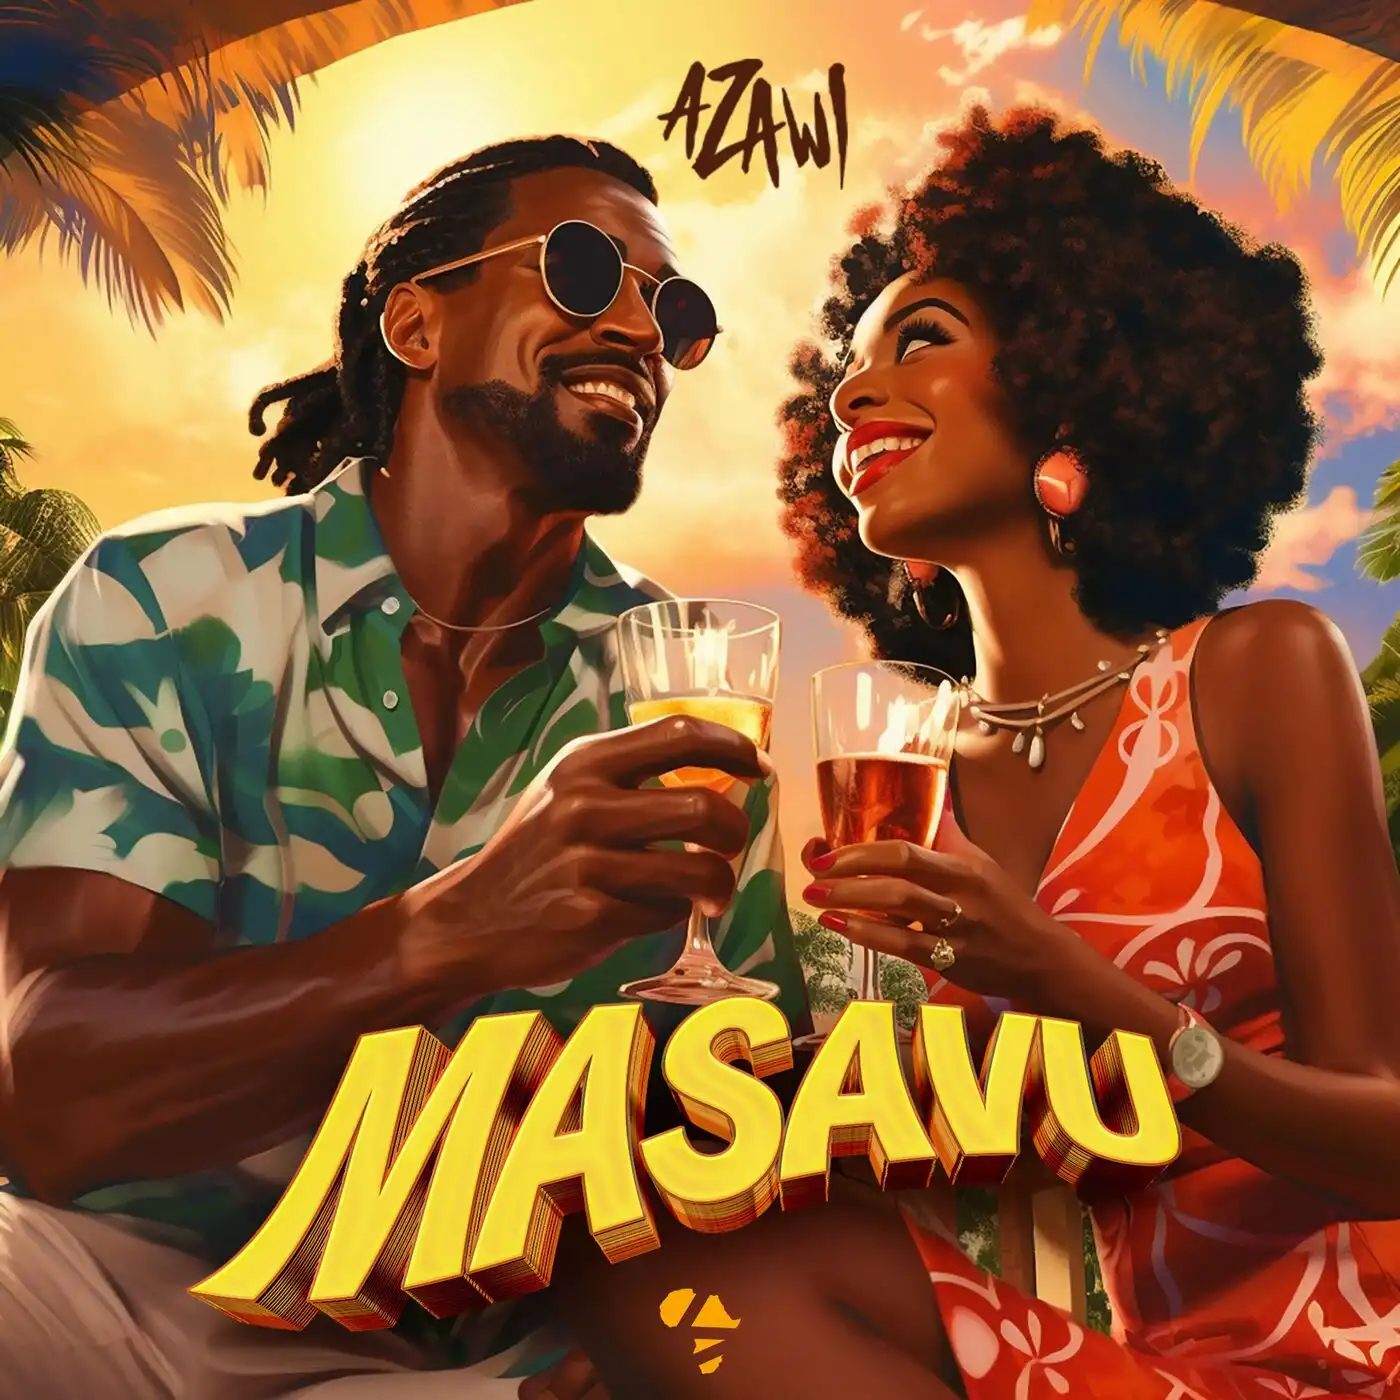 azawi-masavu-album-cover